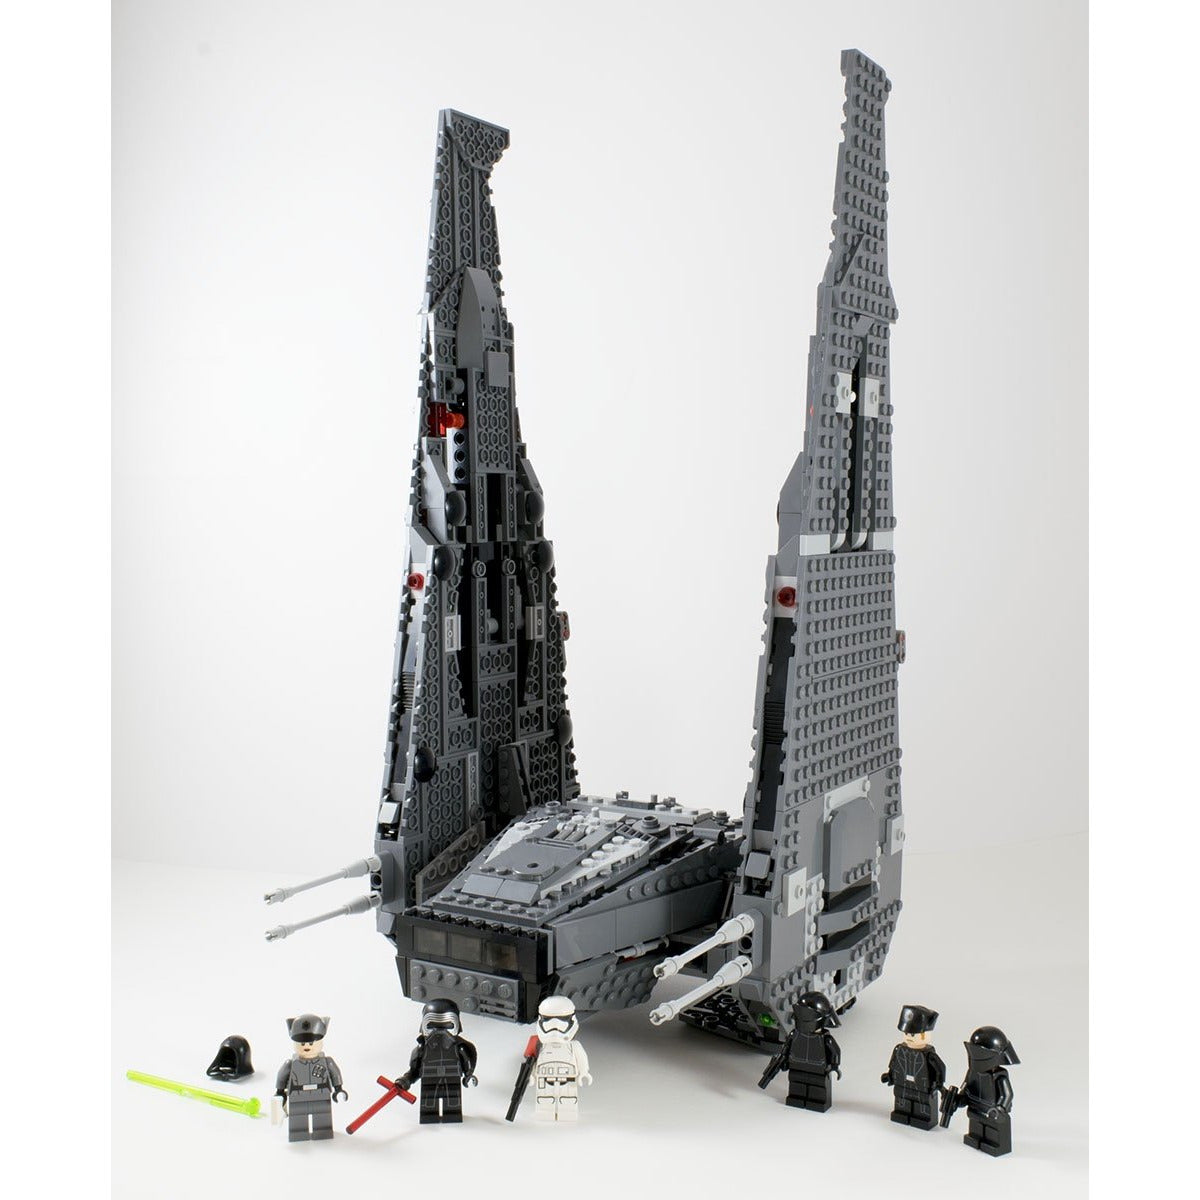 Series: Lego Star Wars: Kylo Ren's Command Shuttle 75104